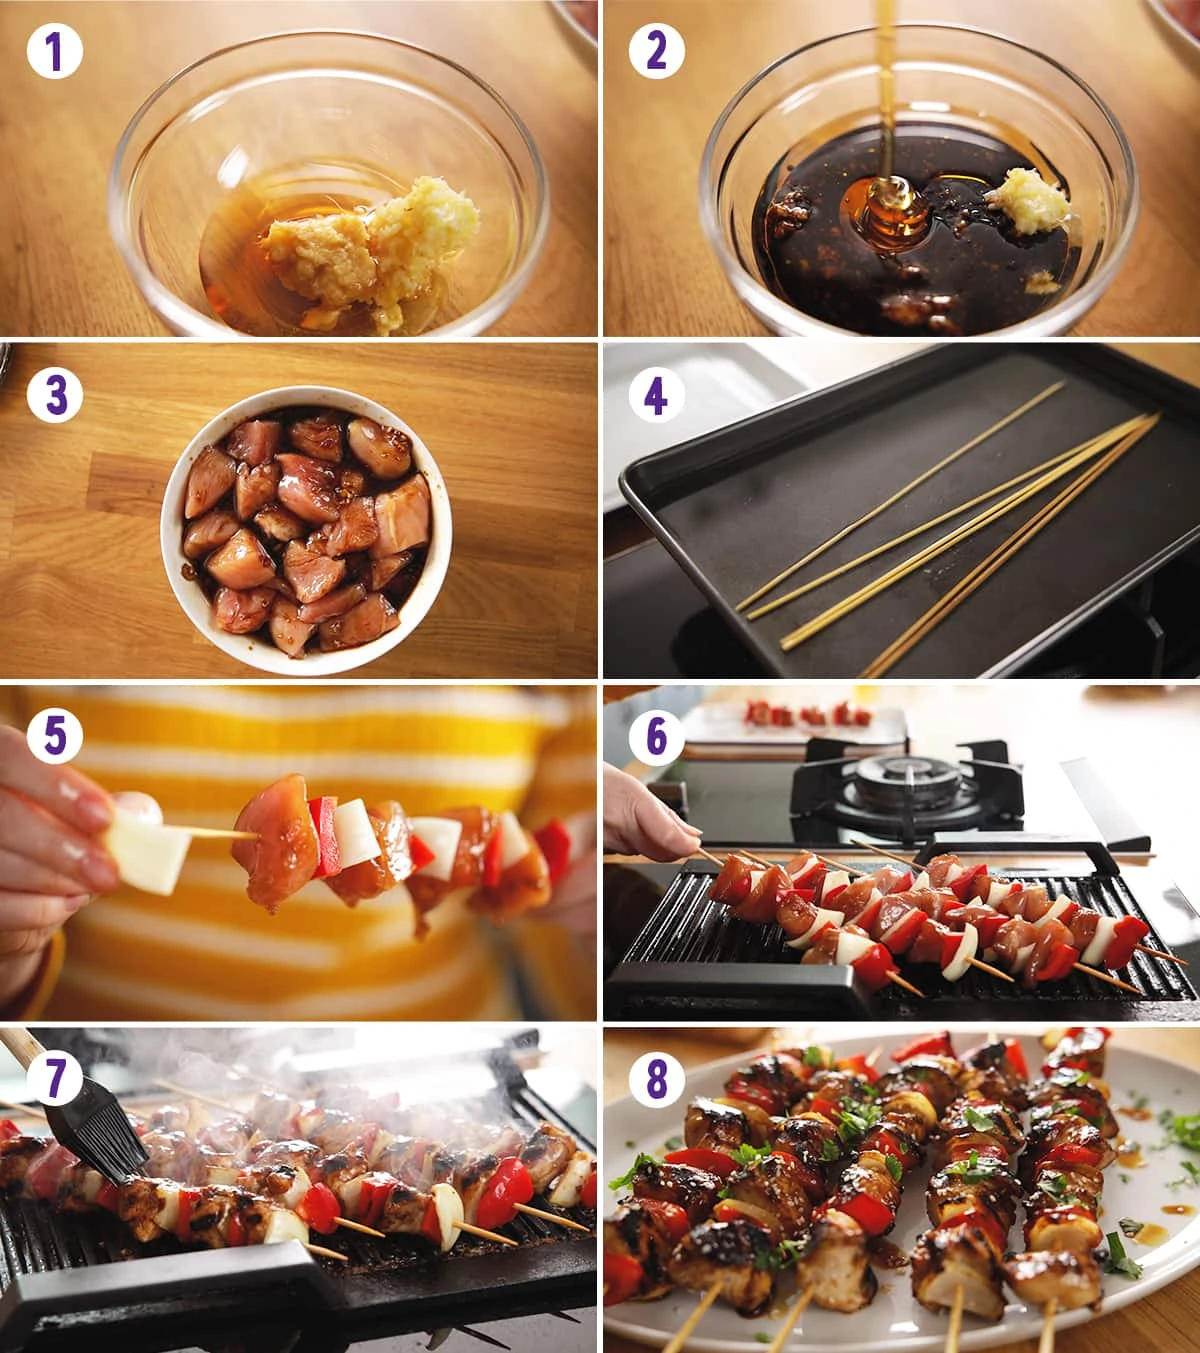 8 image collage showing how to make honey garlic chicken skewers